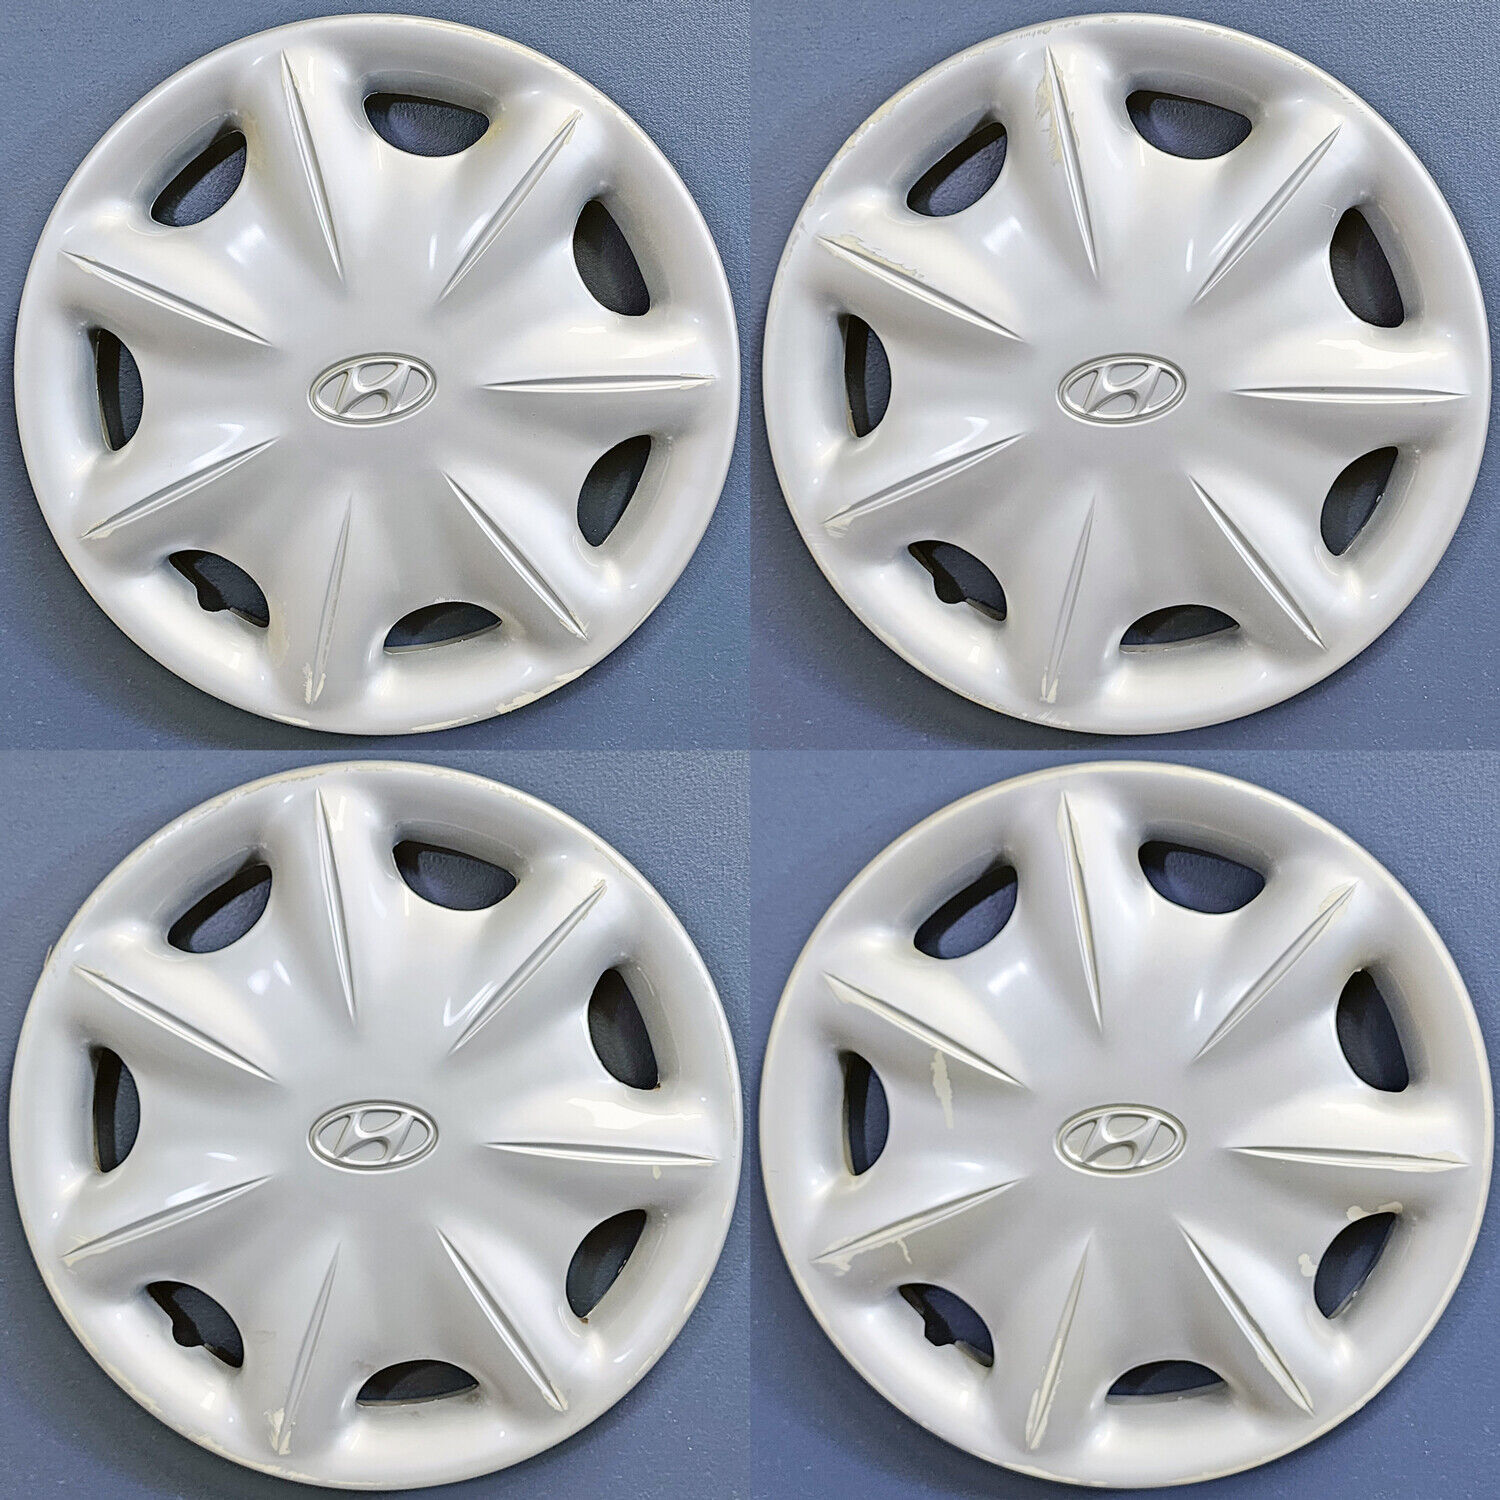 Primary image for 1997-1998 Hyundai Sonata # 55536 14" Hubcaps / Wheel Covers # 5296034960 SET/4